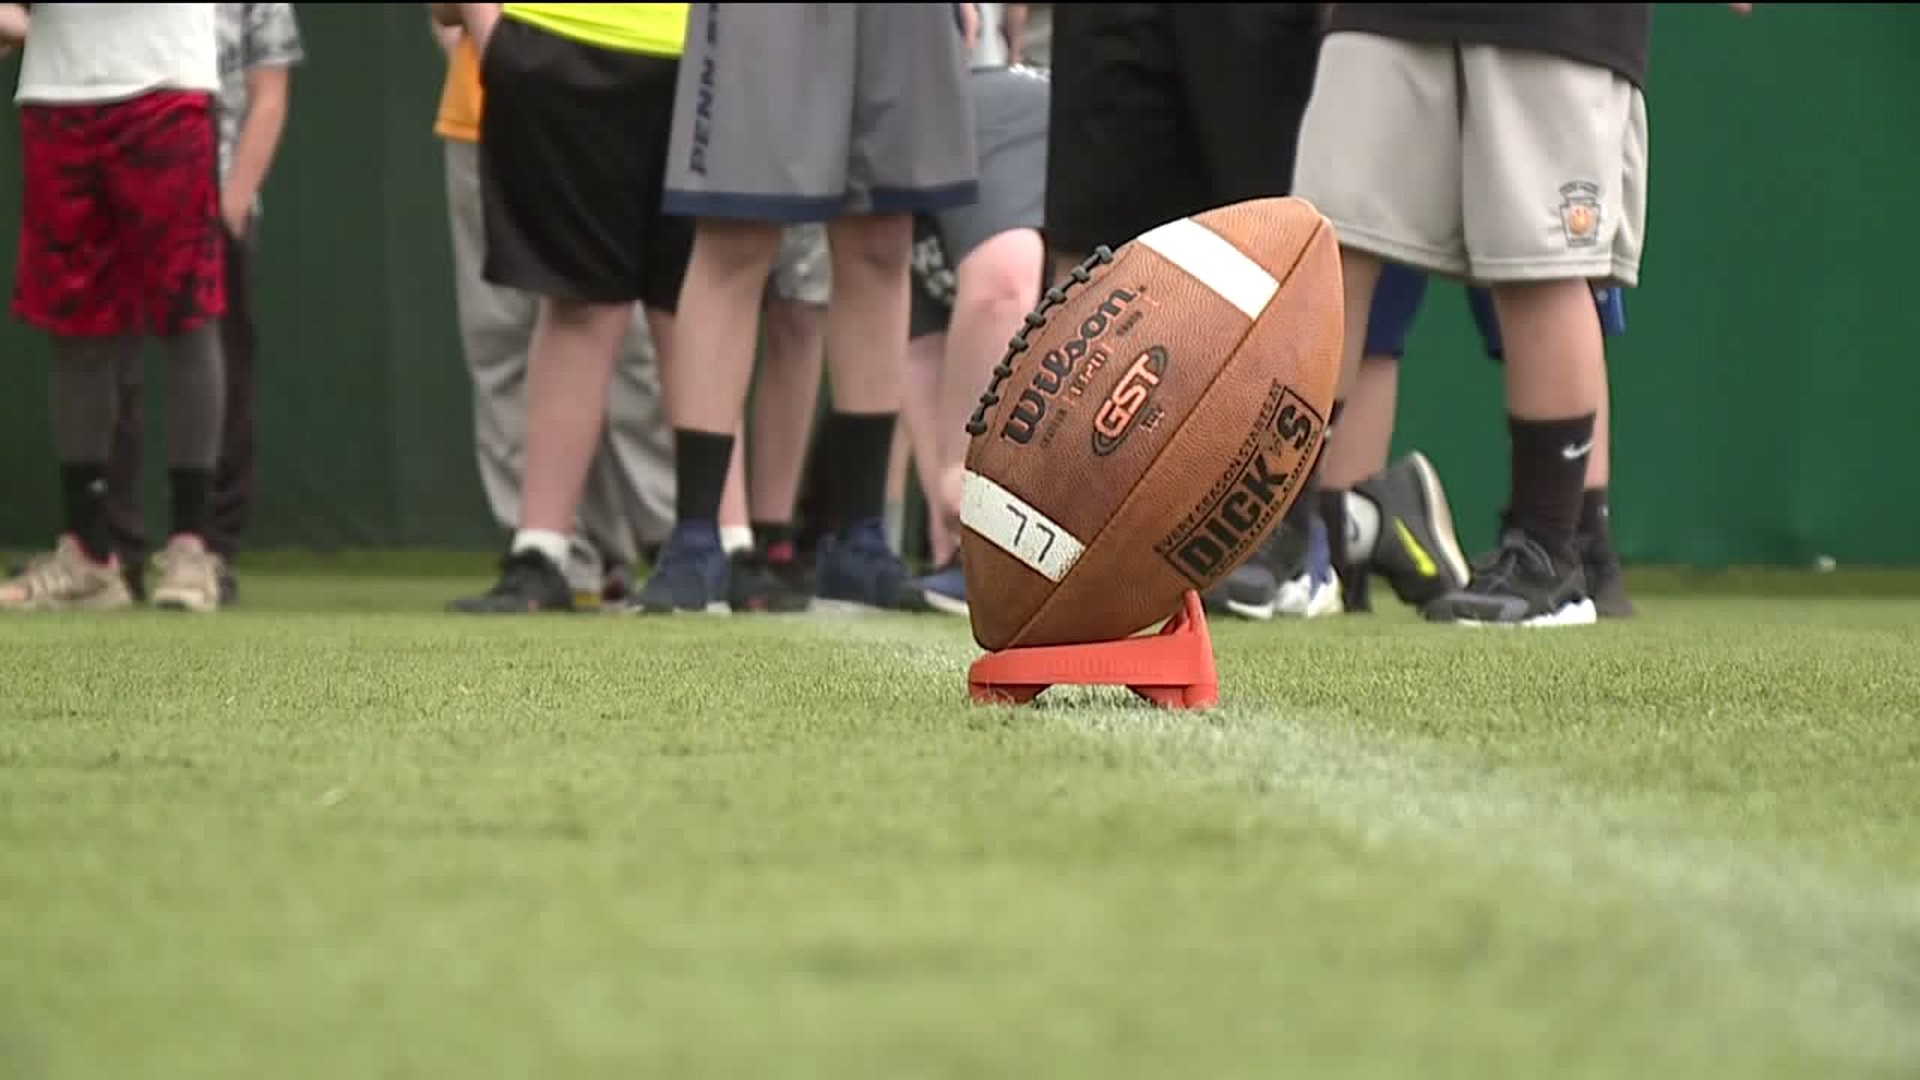 Football Event Raises Concussion Awareness